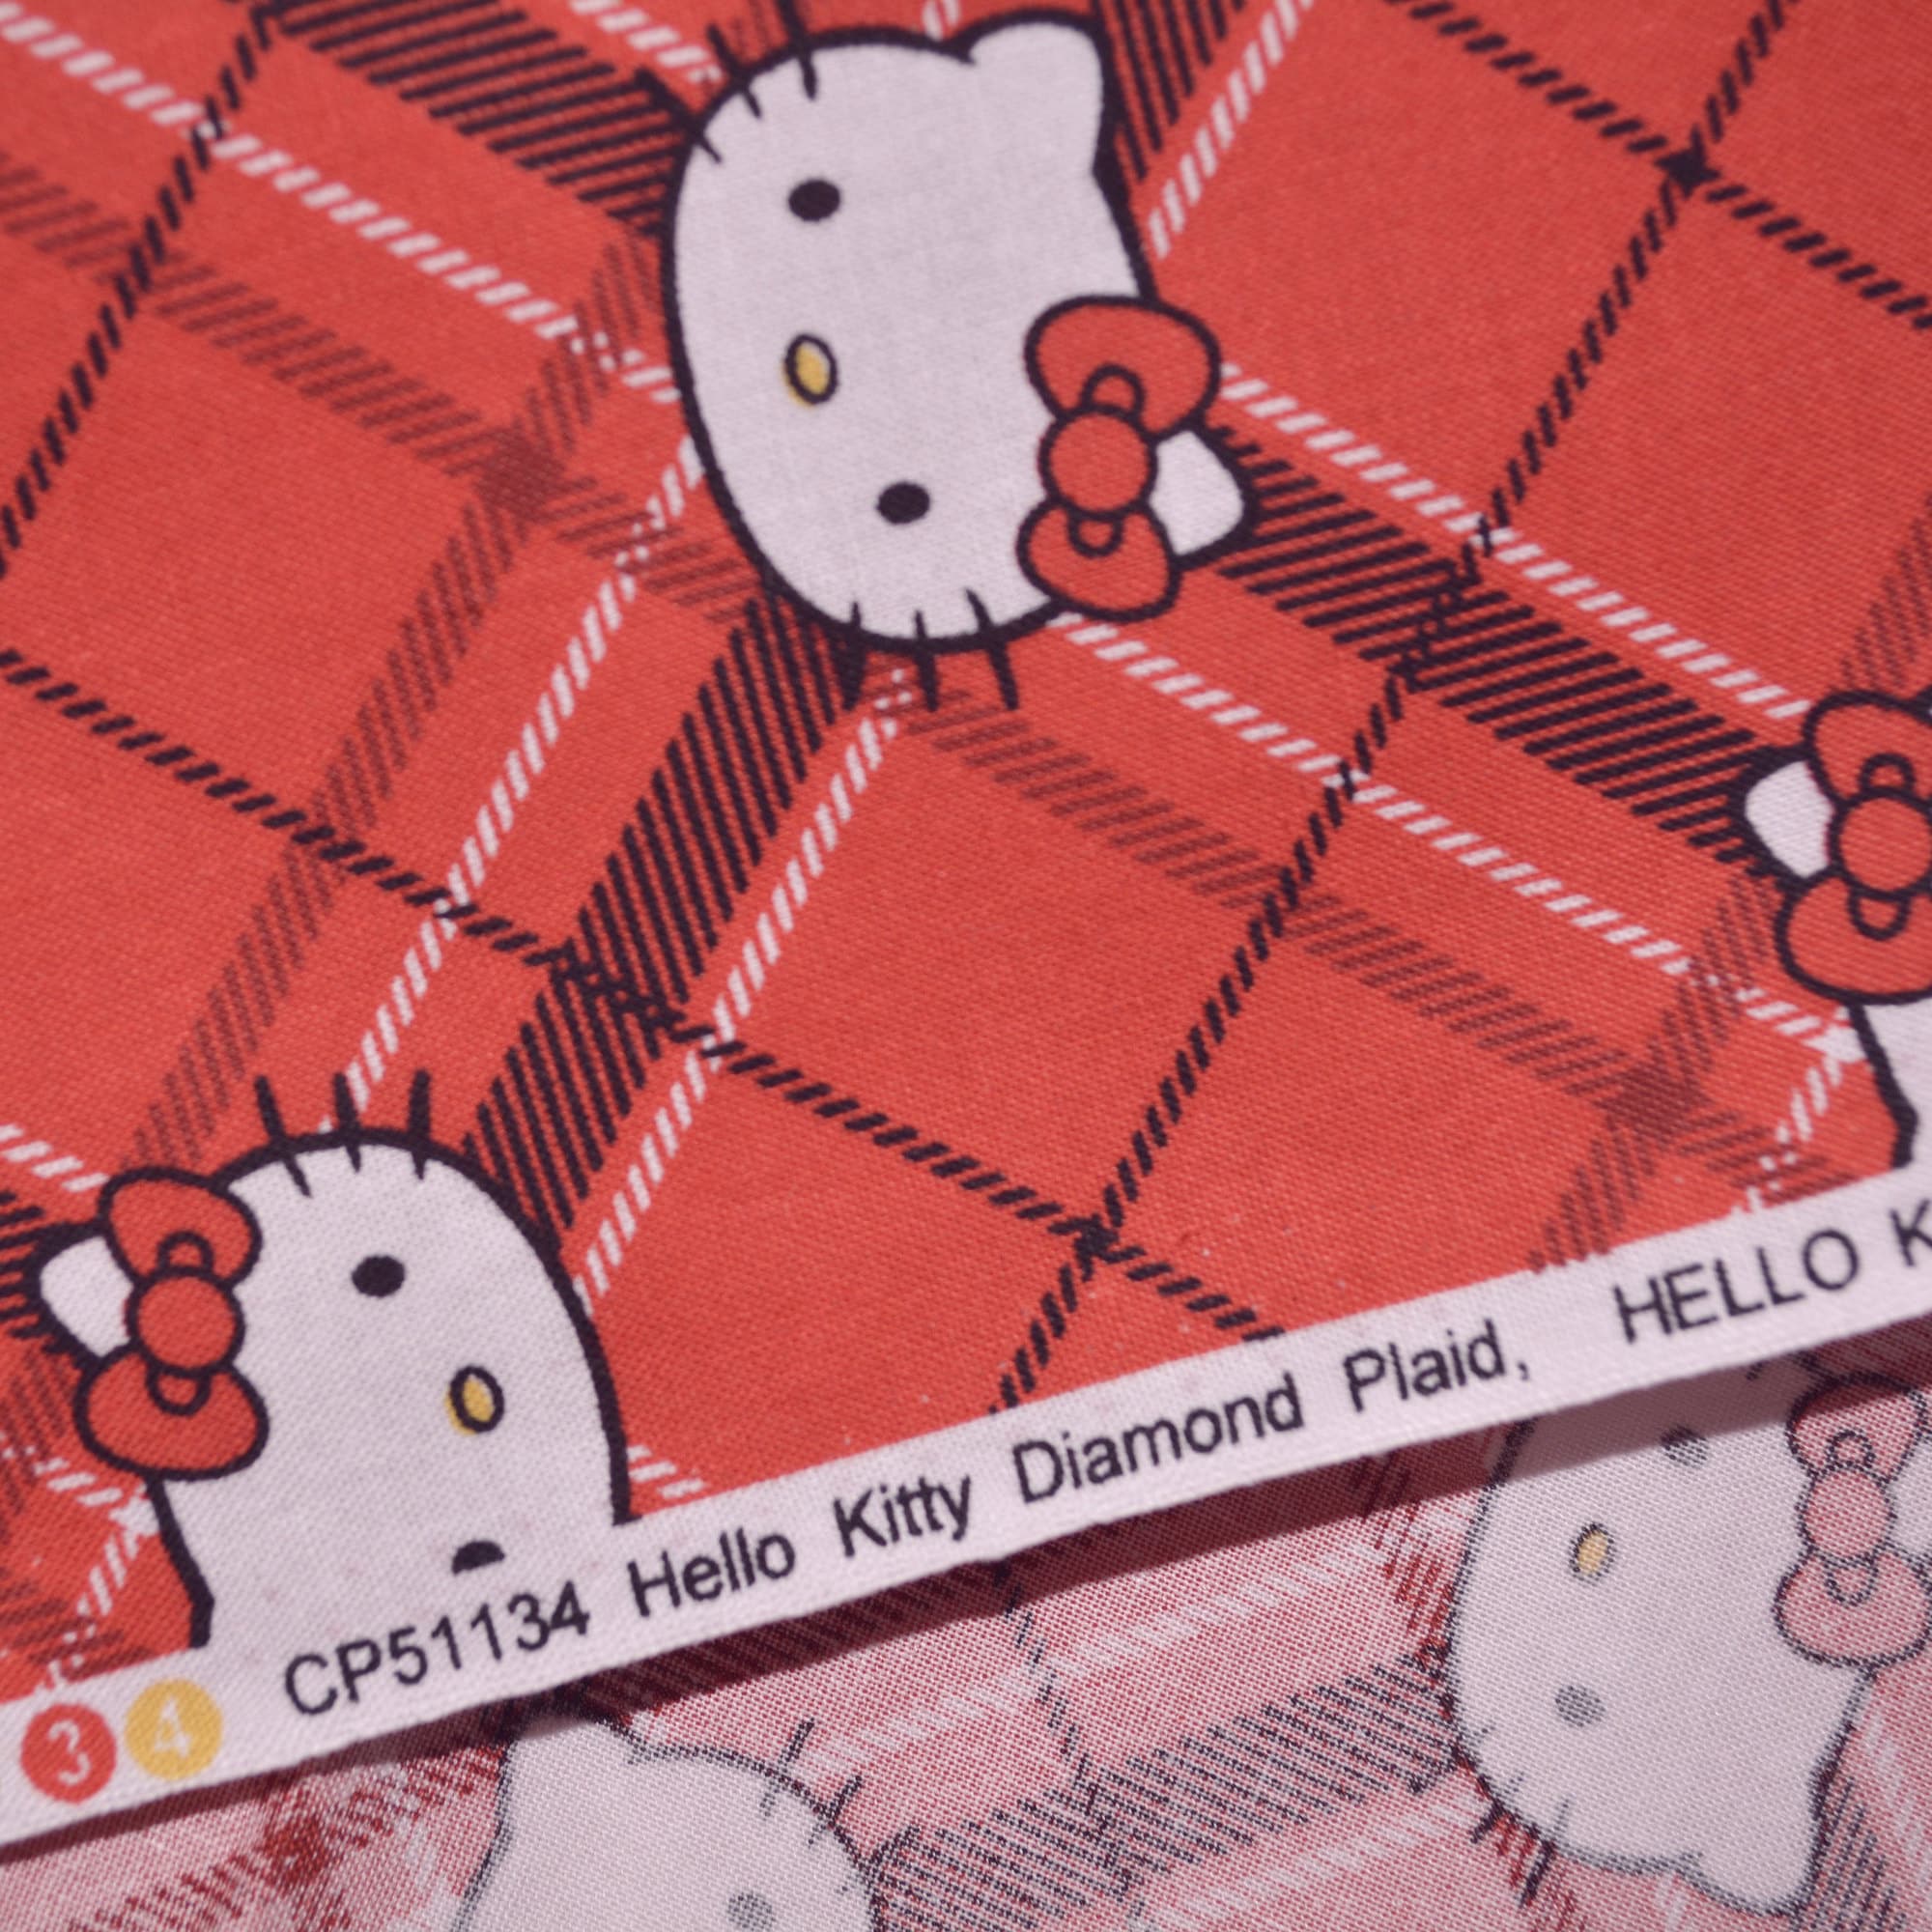 Red Hello Kitty fabric, Diamond Plaid, Scottish plaid, Sanrio and